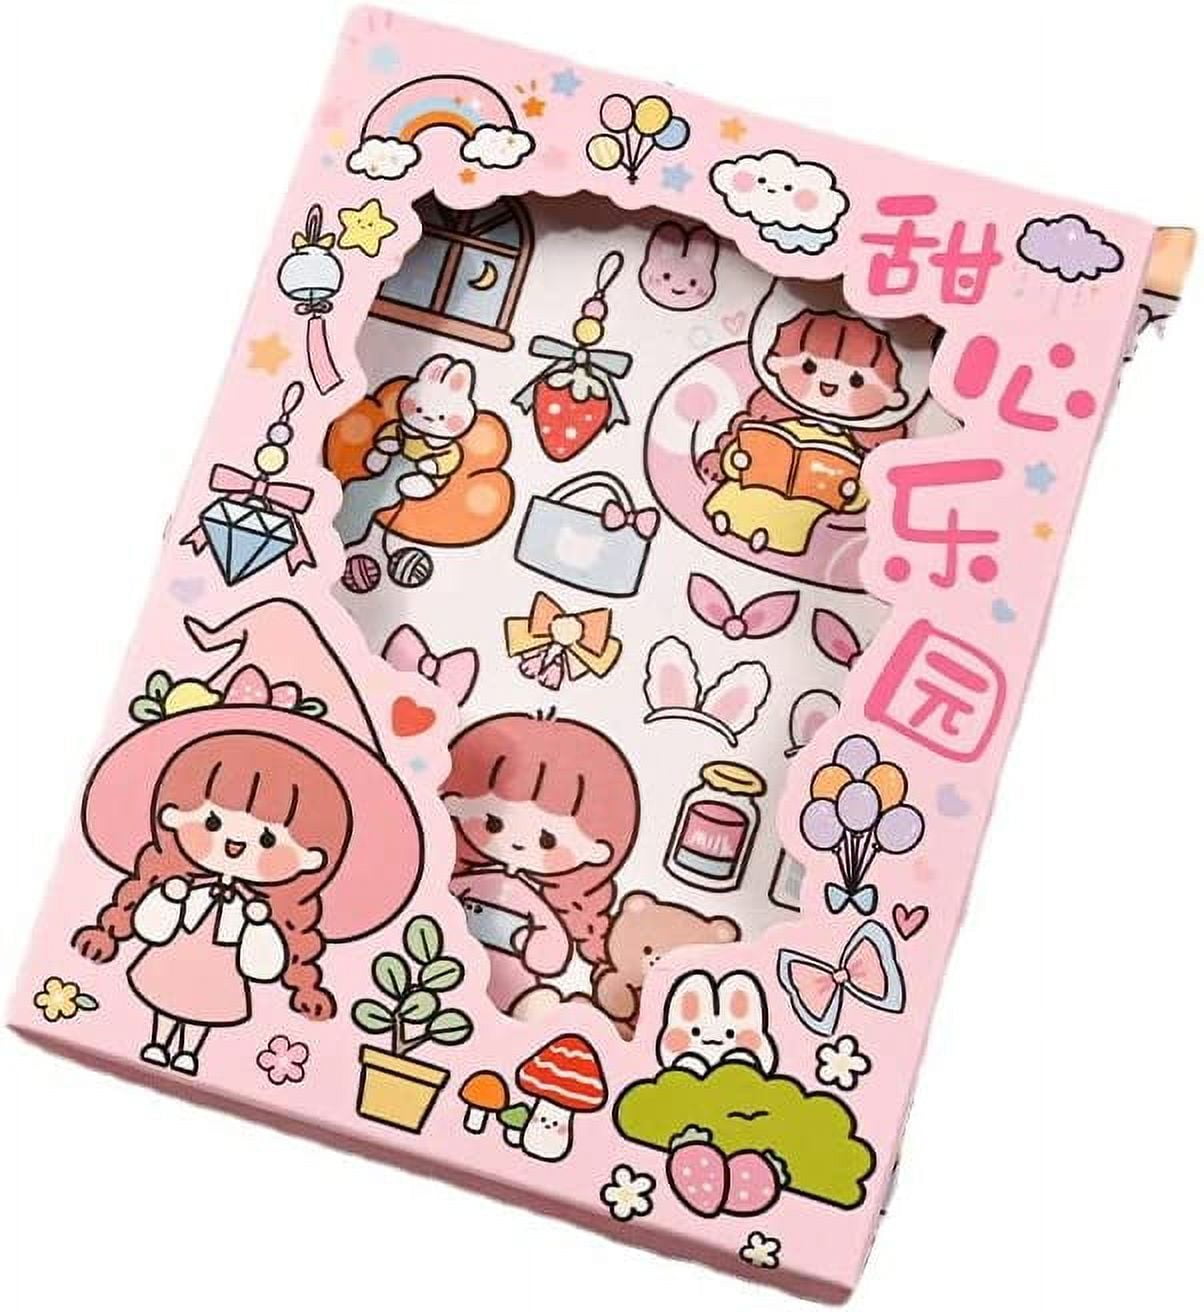 DanceeMangoos 6 Sheets Kawaii Washi Stickers, Cute Cartoon Printed Adhesive  Label Decorative Sticker for Scrapbooking Diary Journaling Planner DIY  Craft, Aesthetic School Stational Supplies Stuffs 